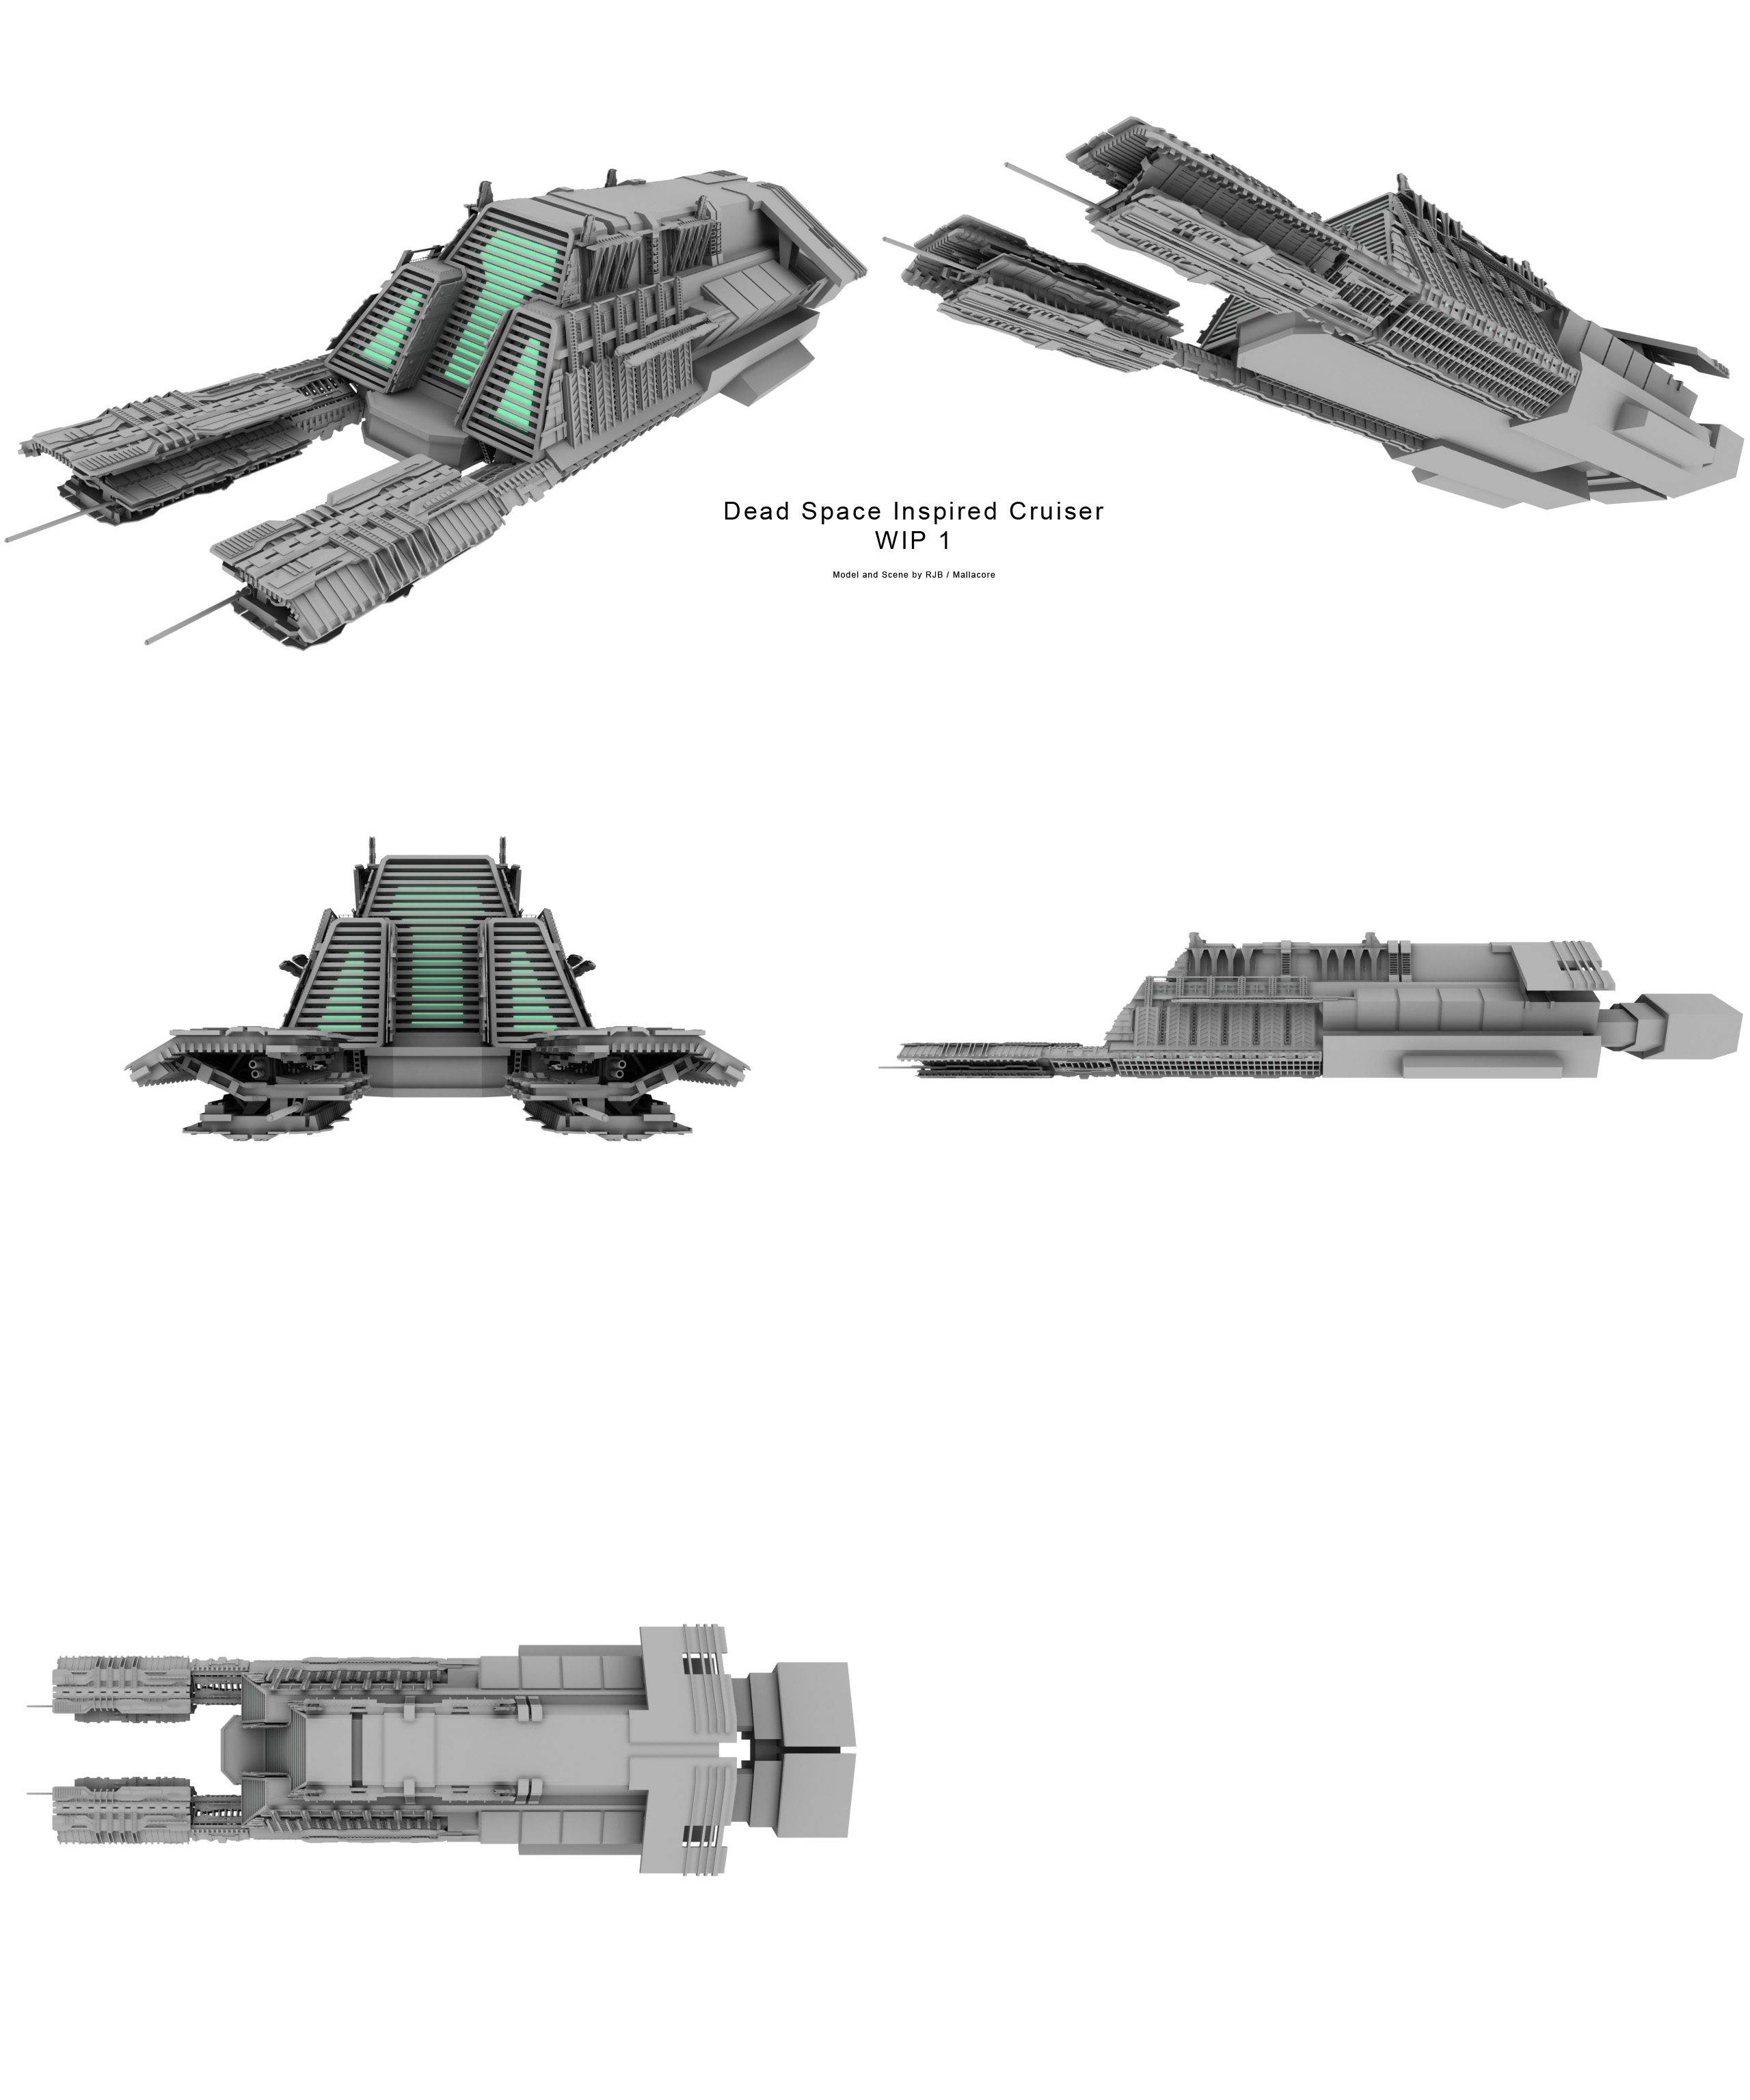 Dead Space Cruiser wip 1 by Mallacore on DeviantArt